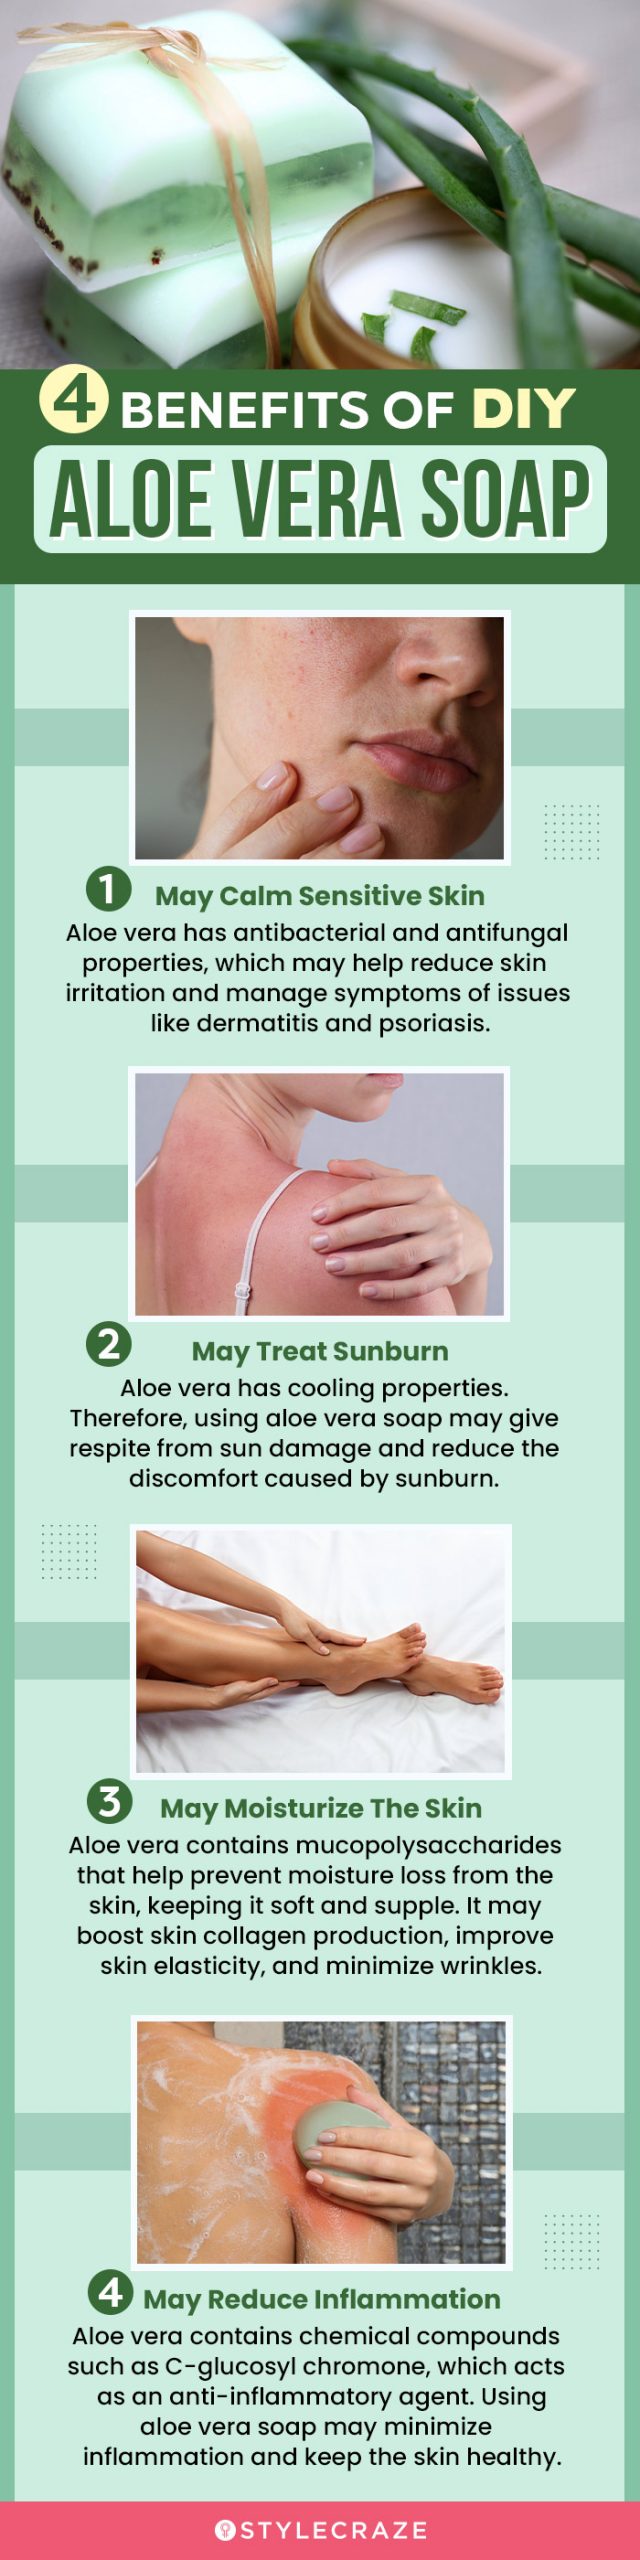 4 benefits of diy aloe vera soap (infographic)